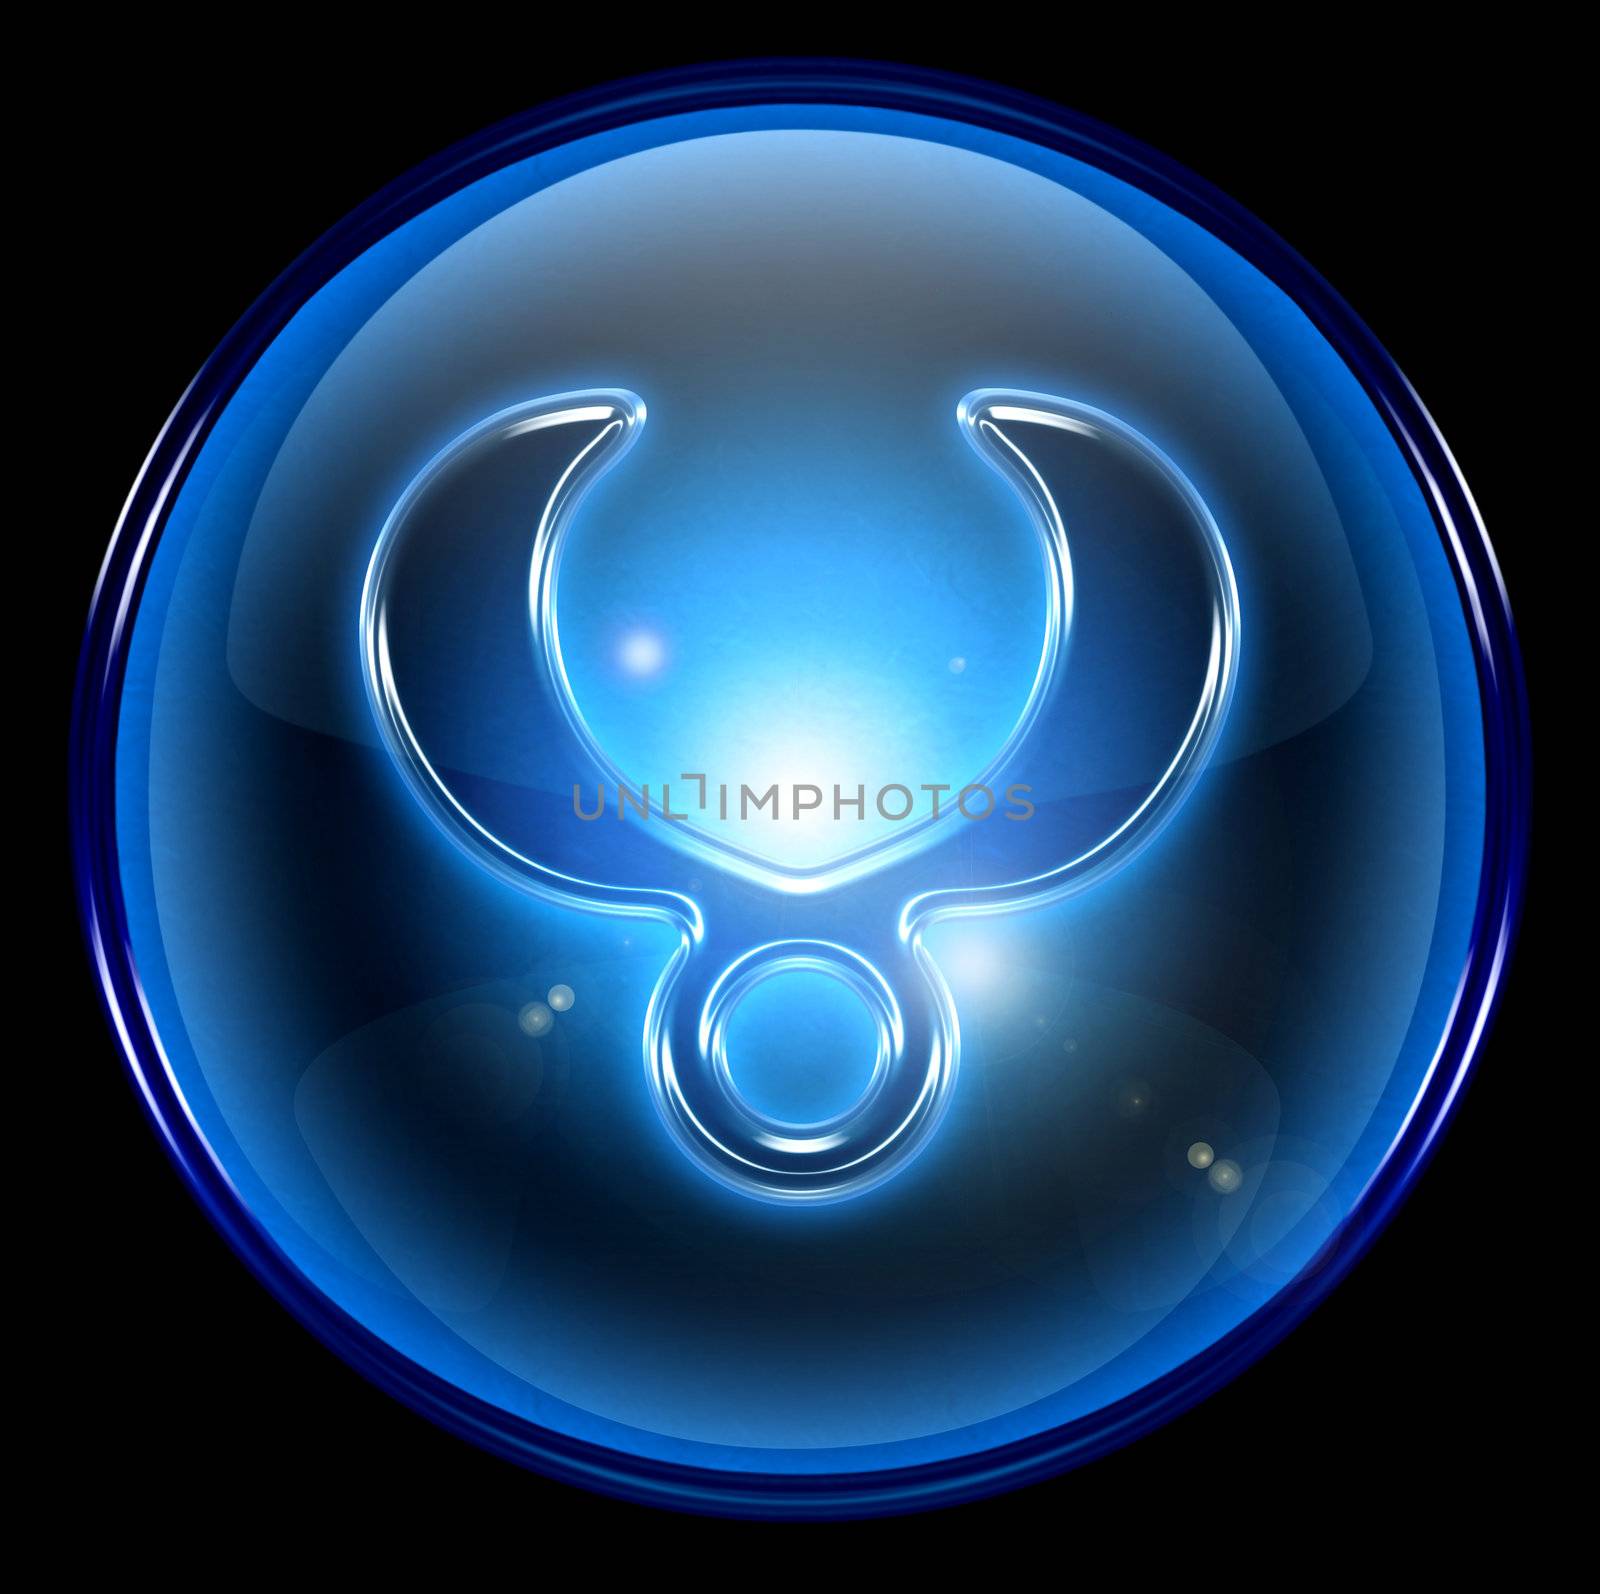 Taurus zodiac button icon, isolated on black background. by zeffss